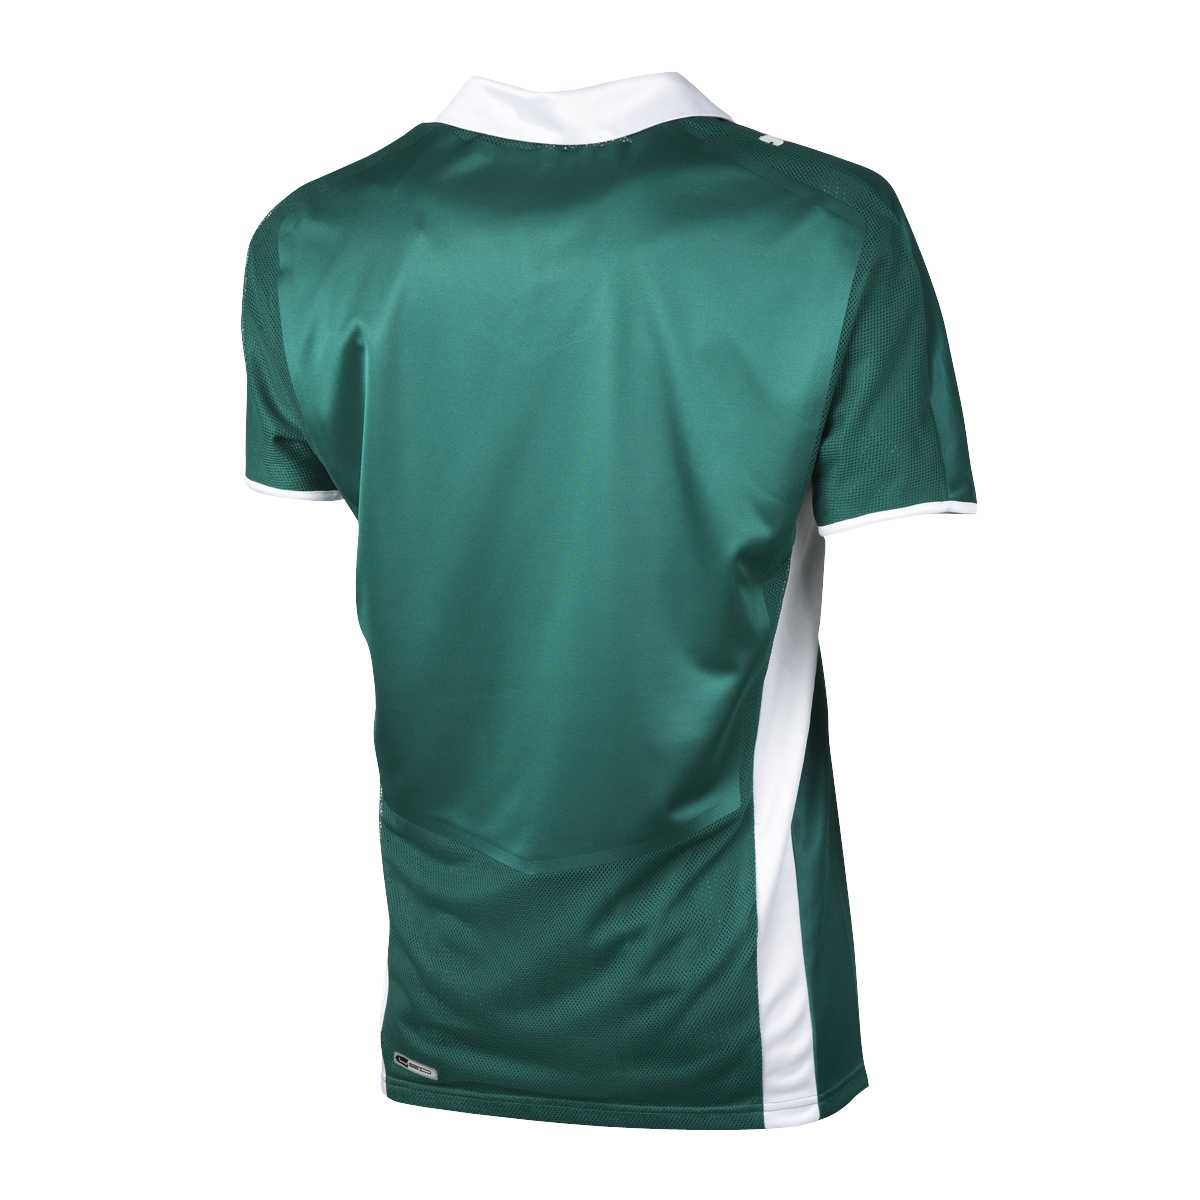 Puma National Teams 2008 Away Shirt Saudi Arabia Herren Trikot 733967 28